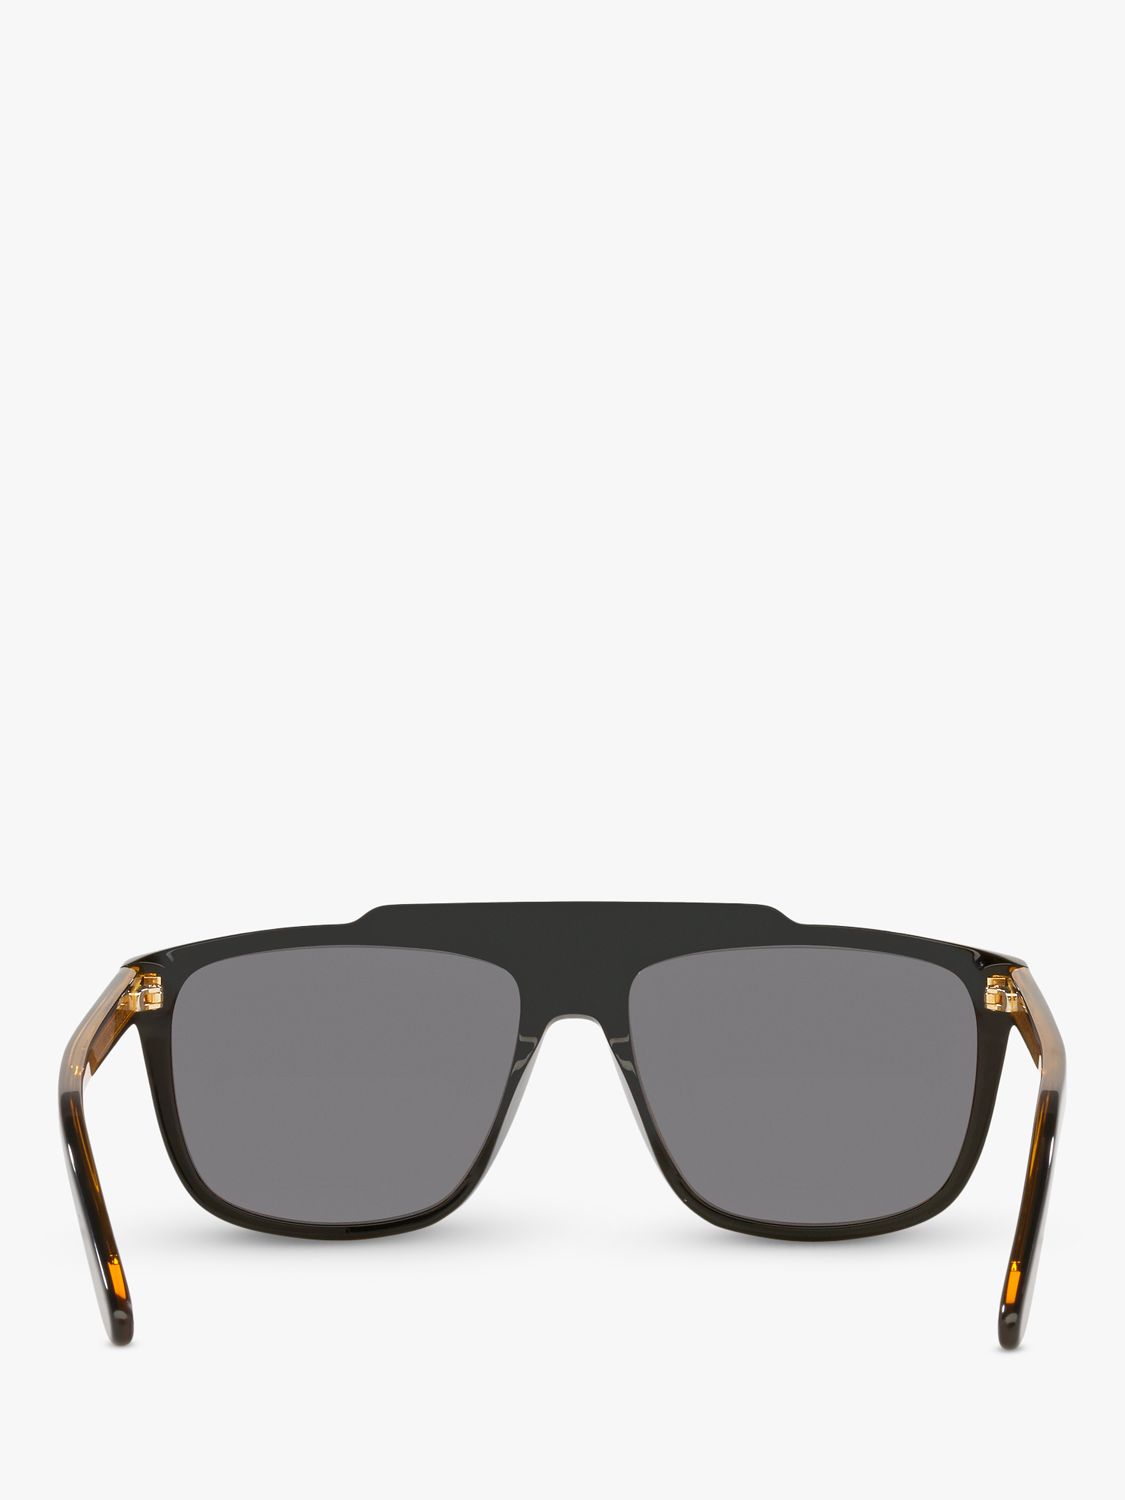 Buy Gucci GG1039S Men's Aviator Sunglasses Online at johnlewis.com